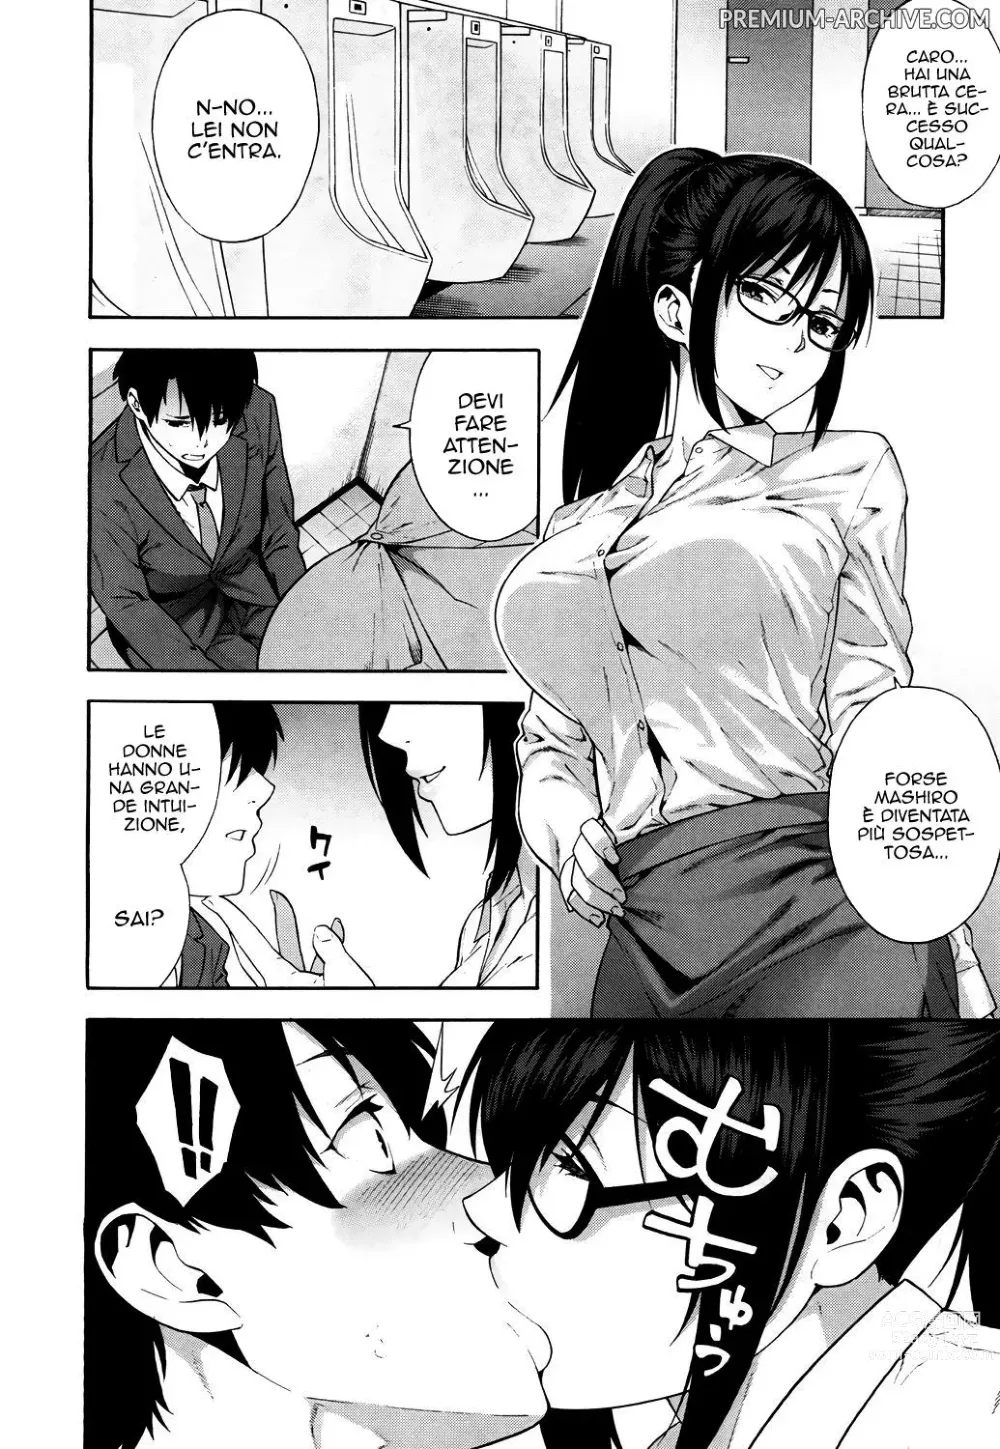 Page 10 of manga La Laurea